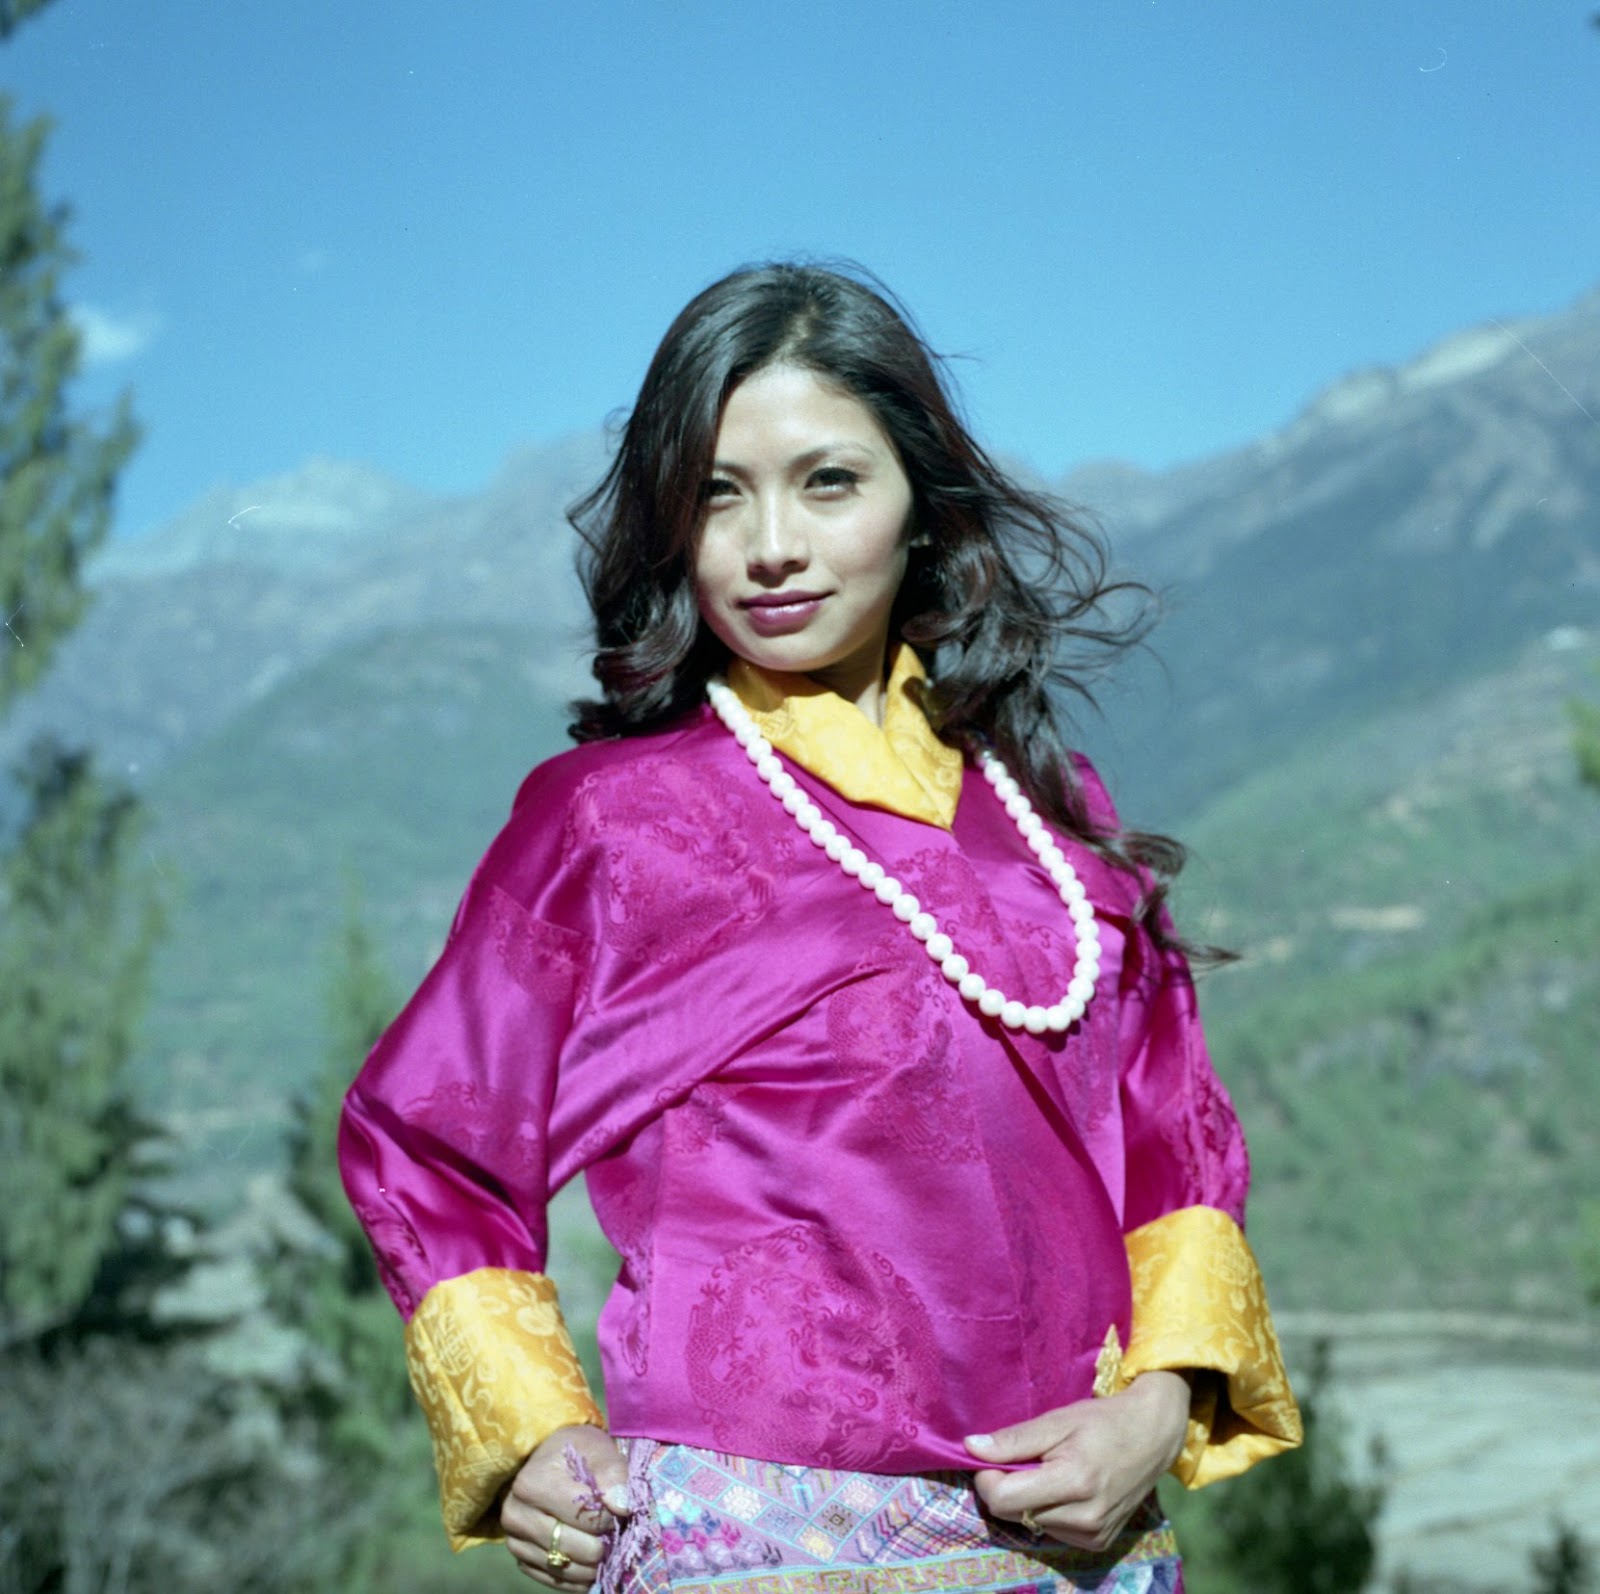 Sexy girls in bhutan - 🧡 Bhutan Travel Guide - xyzAsia.